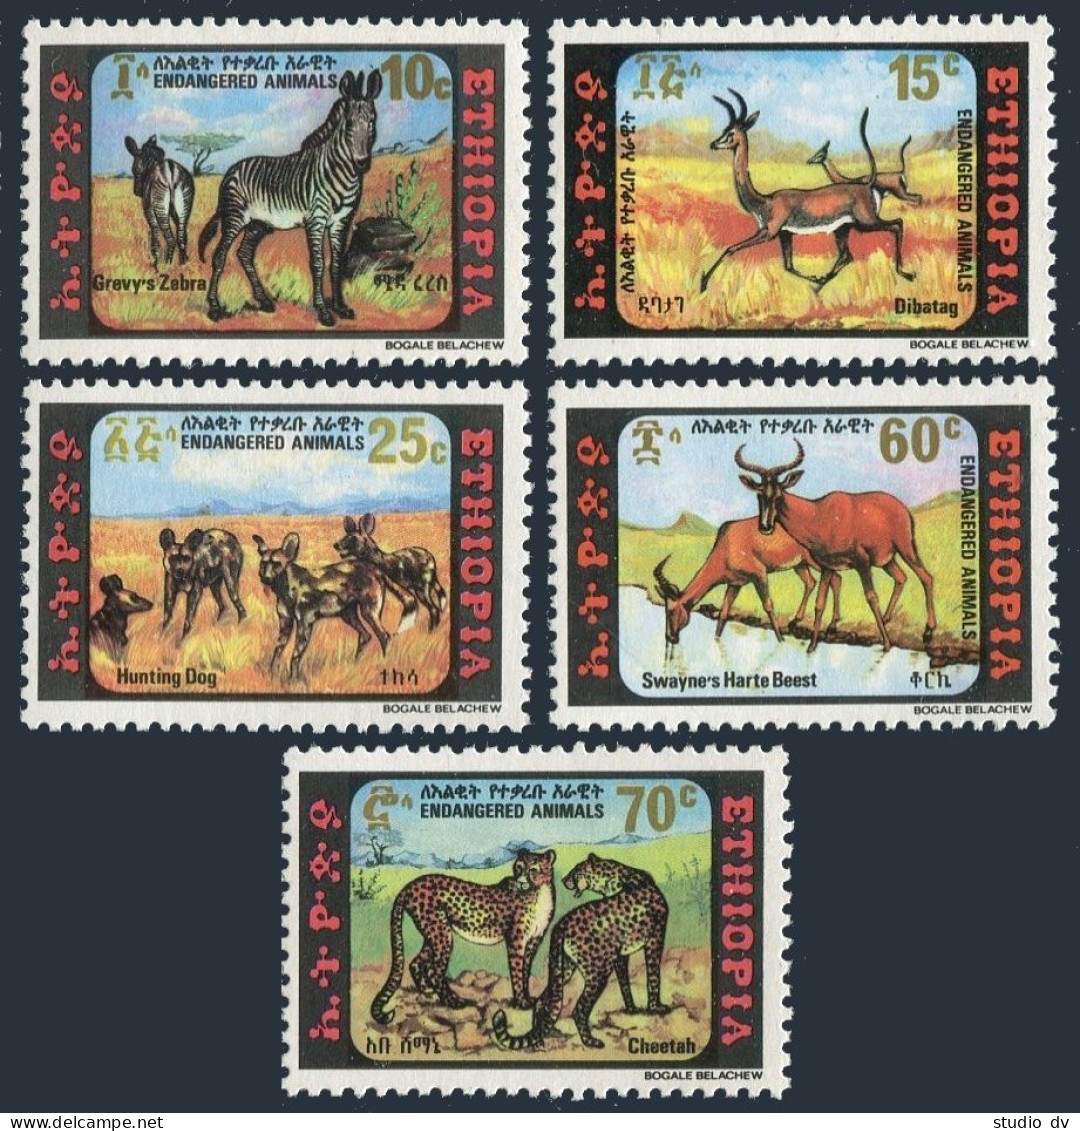 Ethiopia 969-973, MNH. Mi 1055-1059. 1980. Zebra, Gazelle, Hunting Dog, Cheetah, - Ethiopia